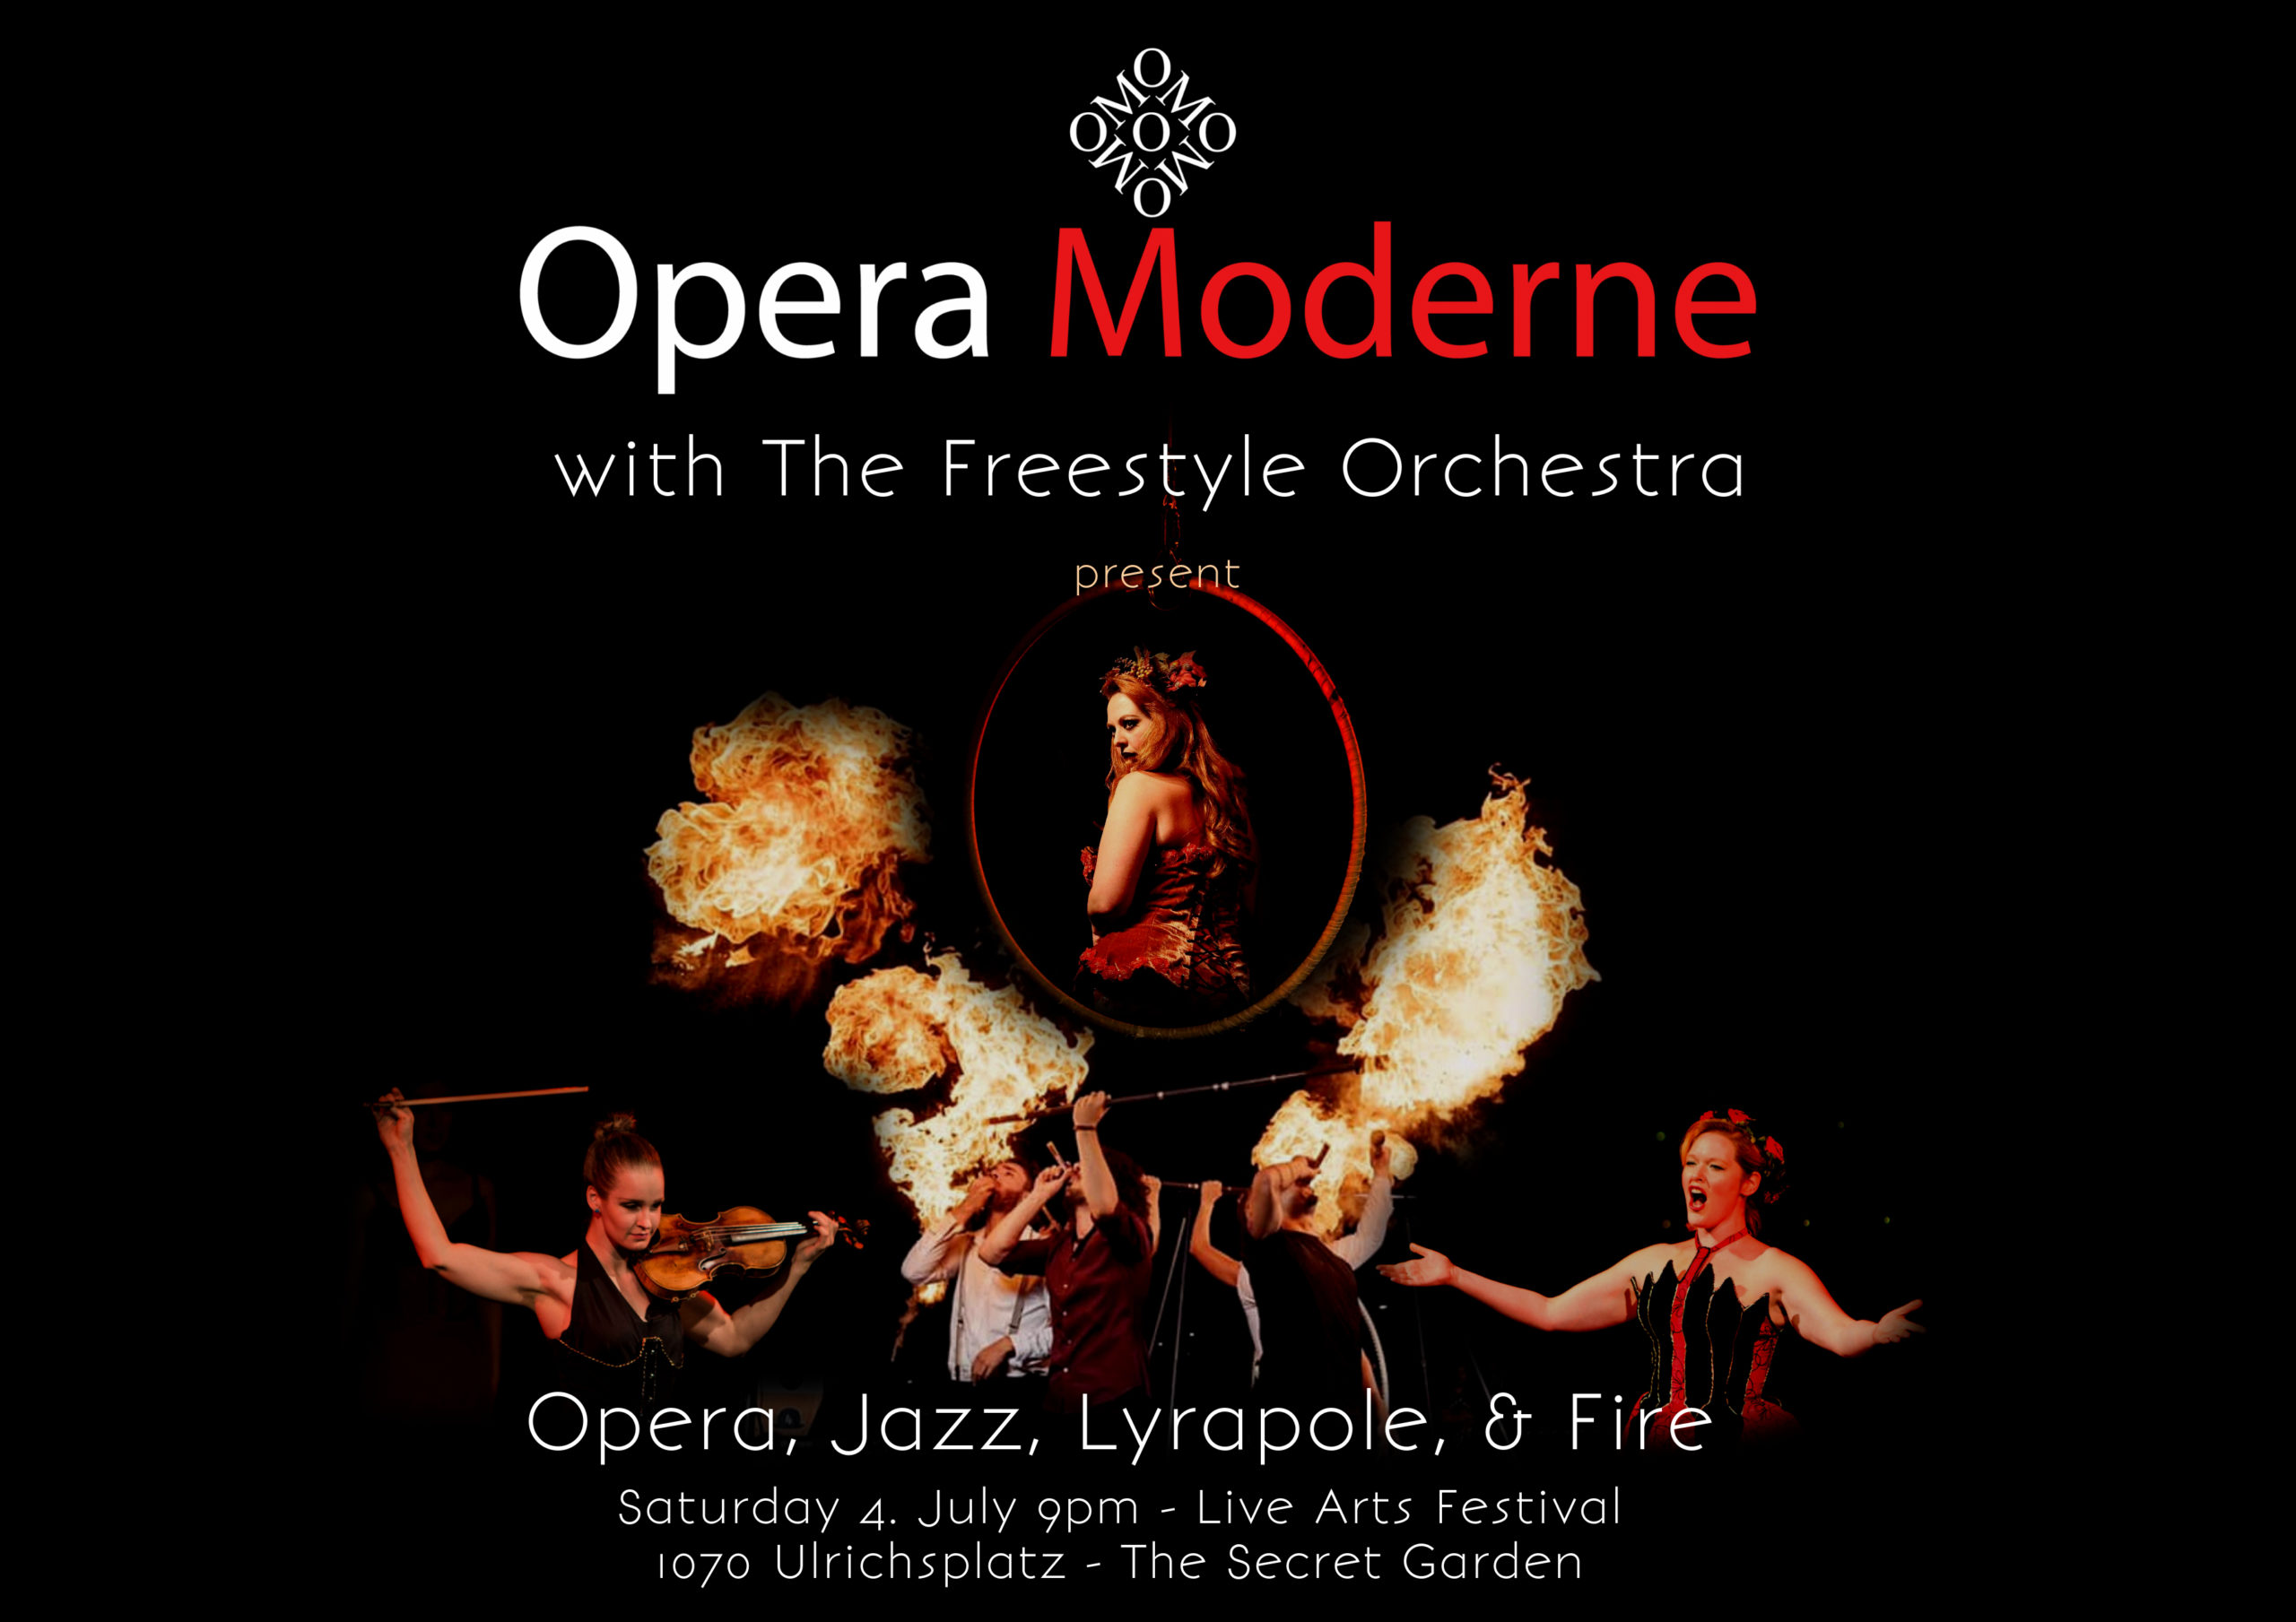 Opera, Jazz, Lyrapole & Fire - Life Art